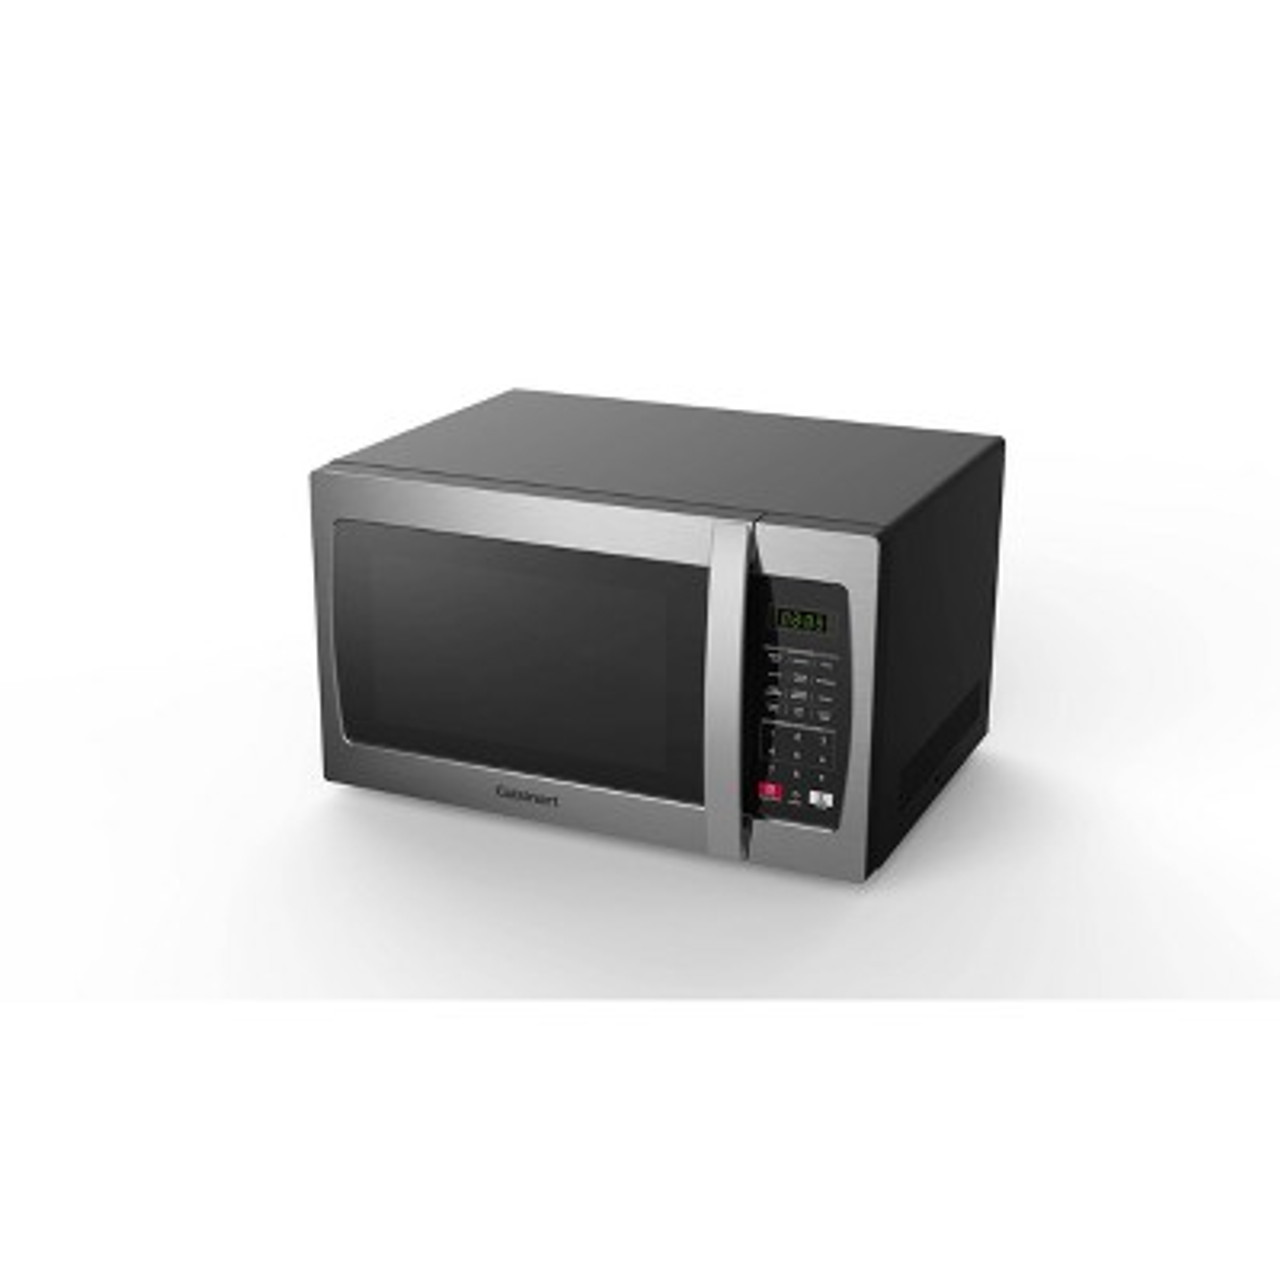 Cuisinart 1.3 Cu Ft Microwave Oven : Target